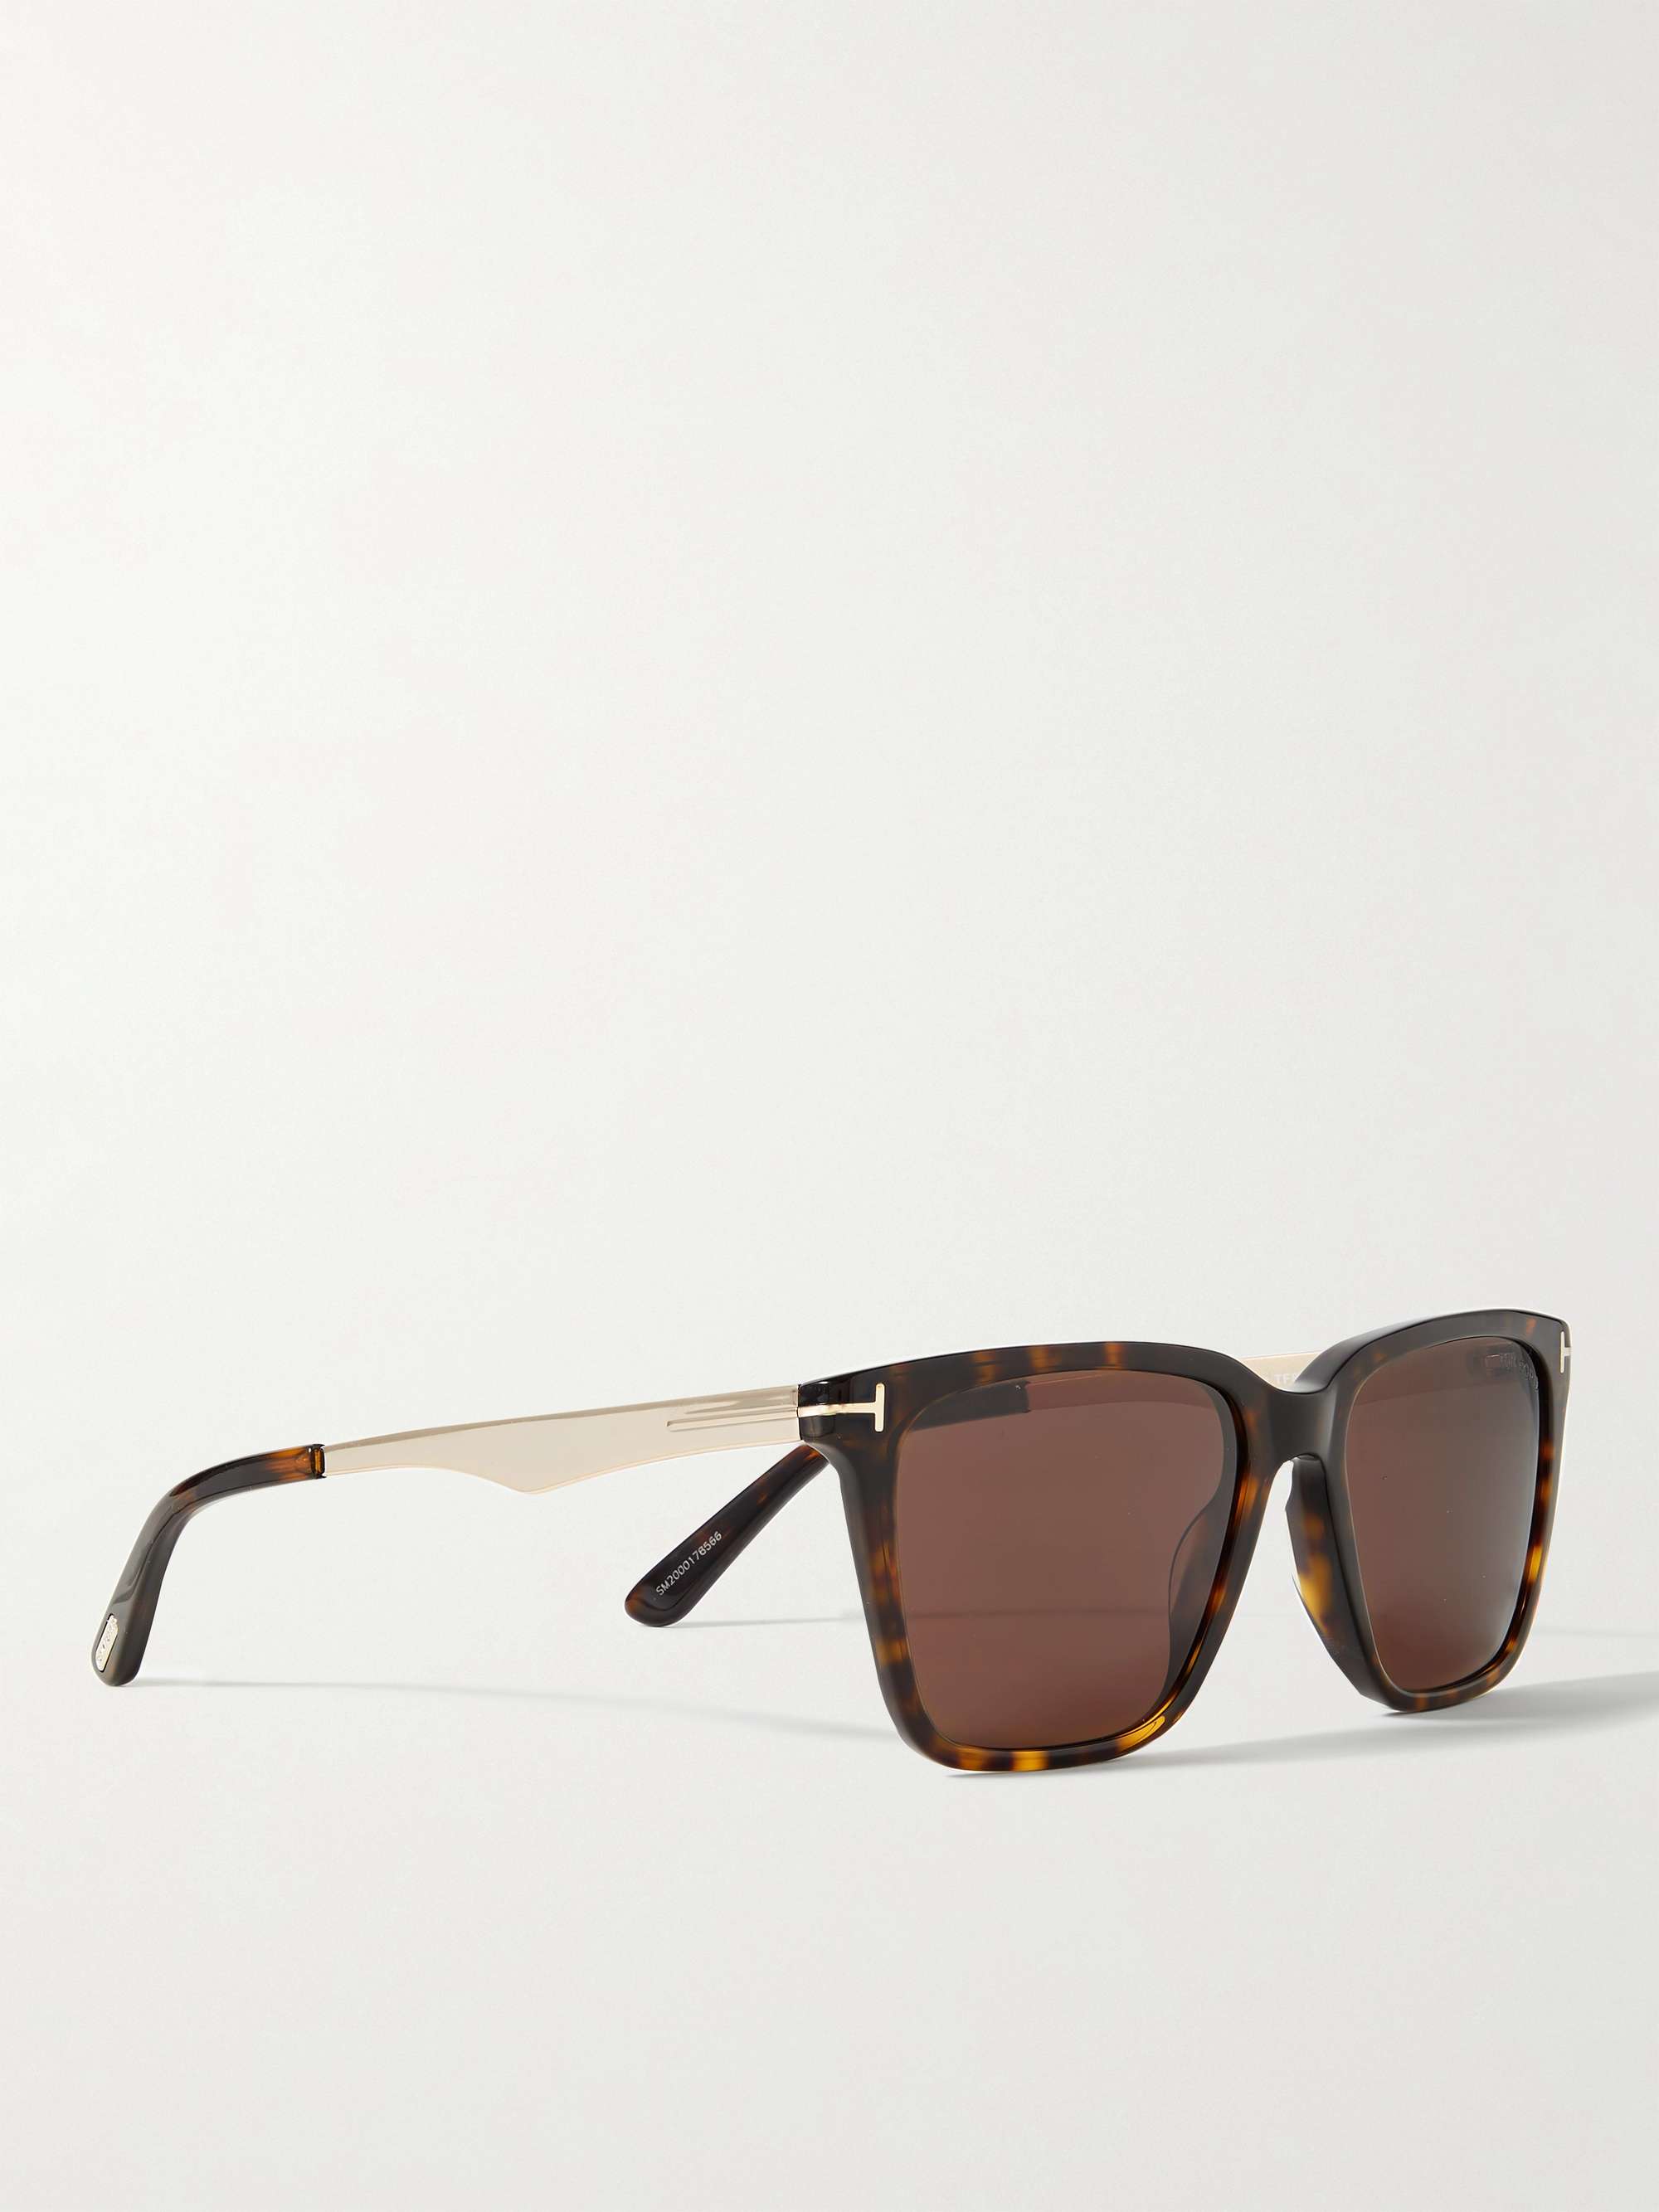 TOM FORD Square-Frame Tortoiseshell Acetate and Silver-Tone Sunglasses